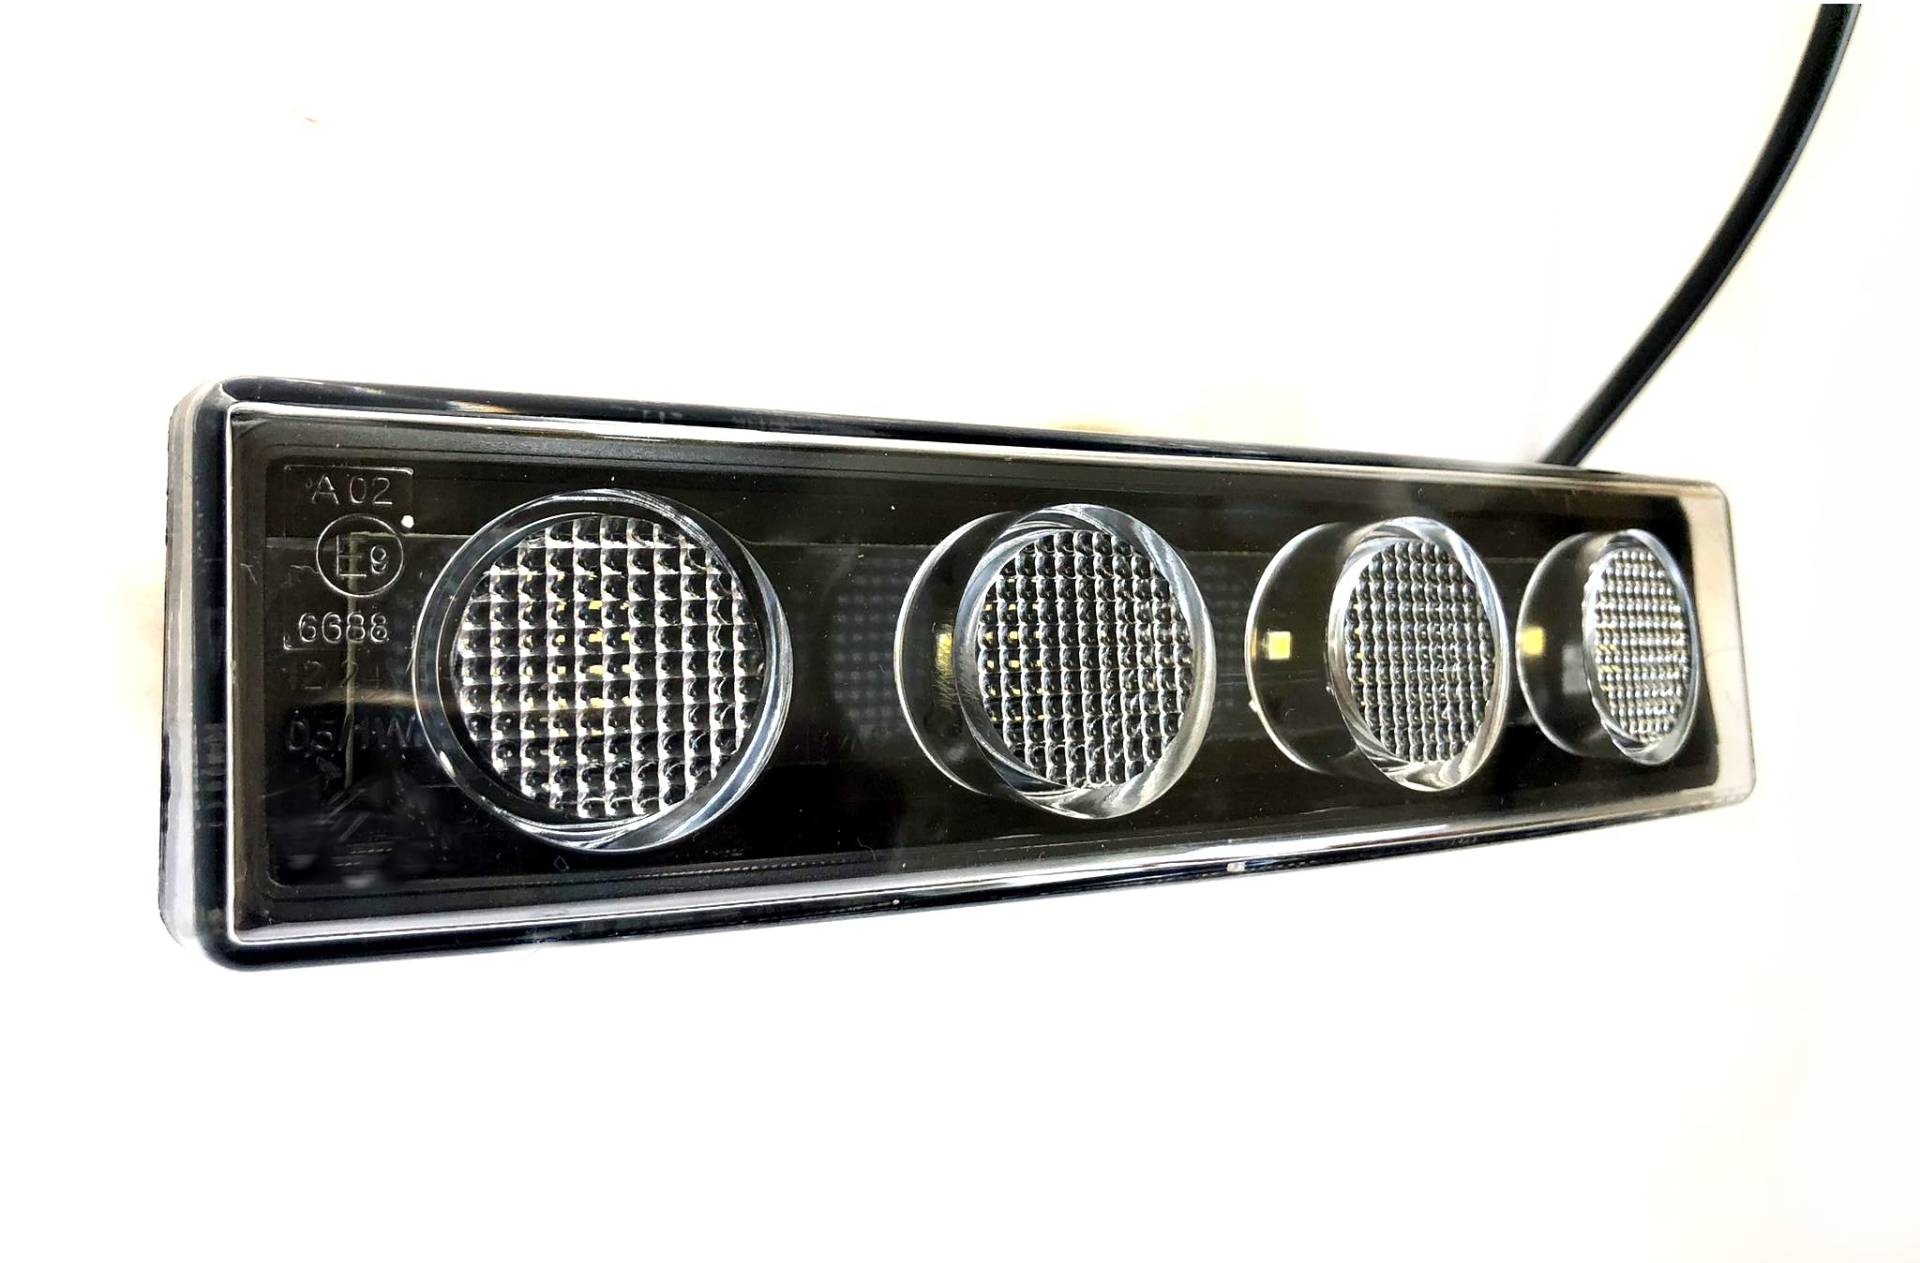 MelTruck® LED Positionsleuchte Umrissleuchte für SCANIA 4 LED 12/24V LKW PKW Anhänger E9 von MelTruck